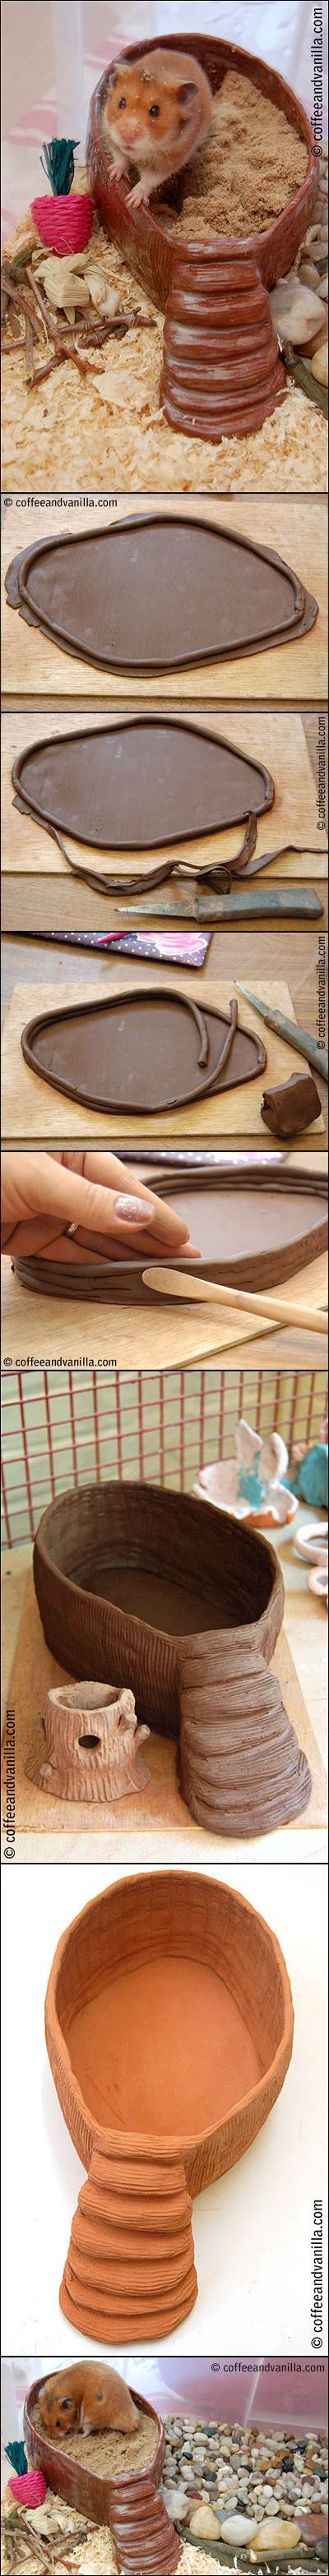 DIY Terracotta Clay Sand Bathtub for Hamsters 2